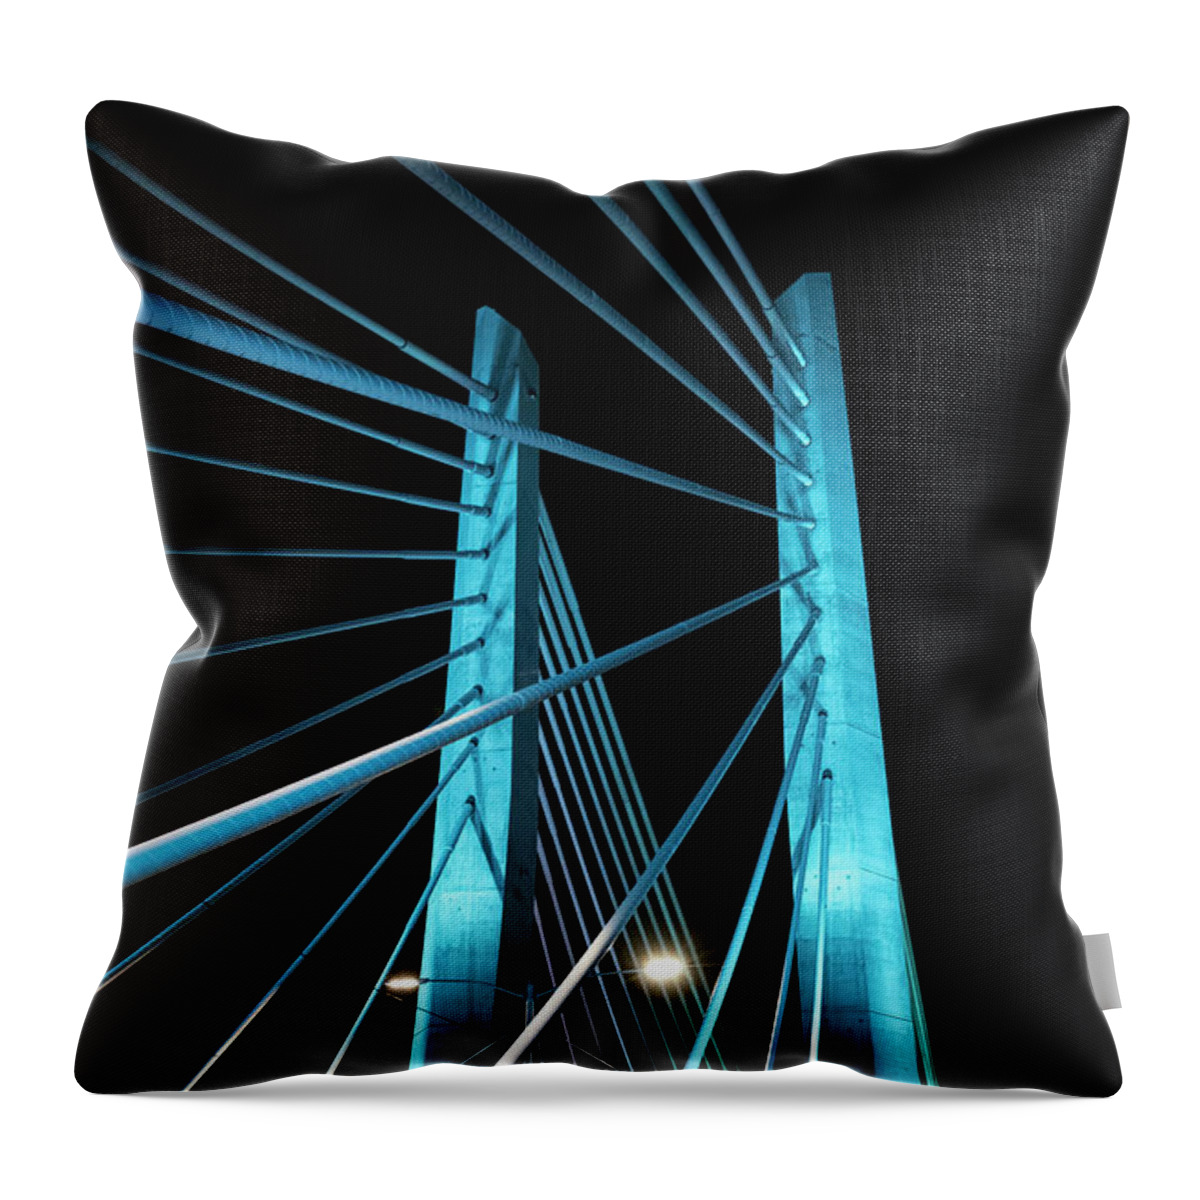 Oregon Portland Throw Pillow featuring the photograph Tilikum Bridge by Steven Clark